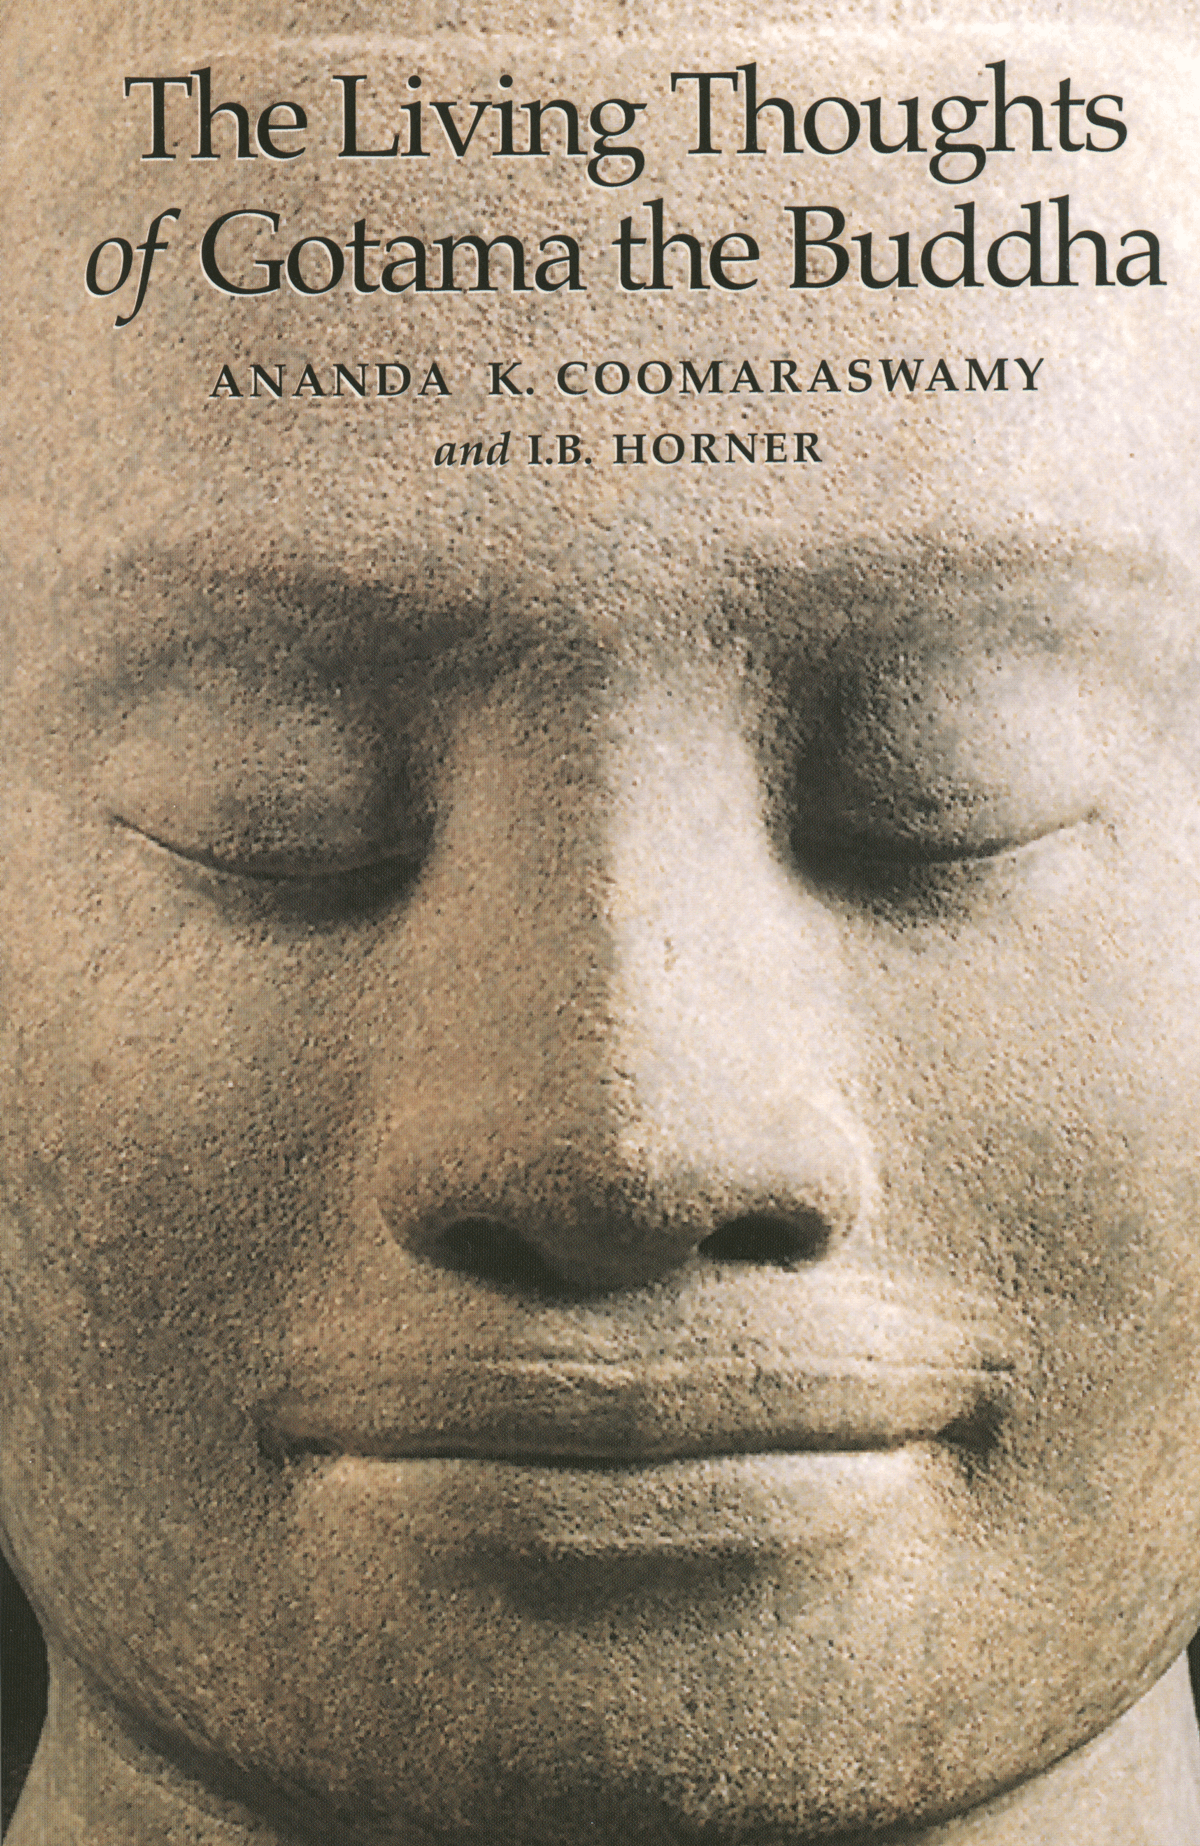 The-Origin-of-the-Buddha-Image--Elements-of-Buddhist-Iconography